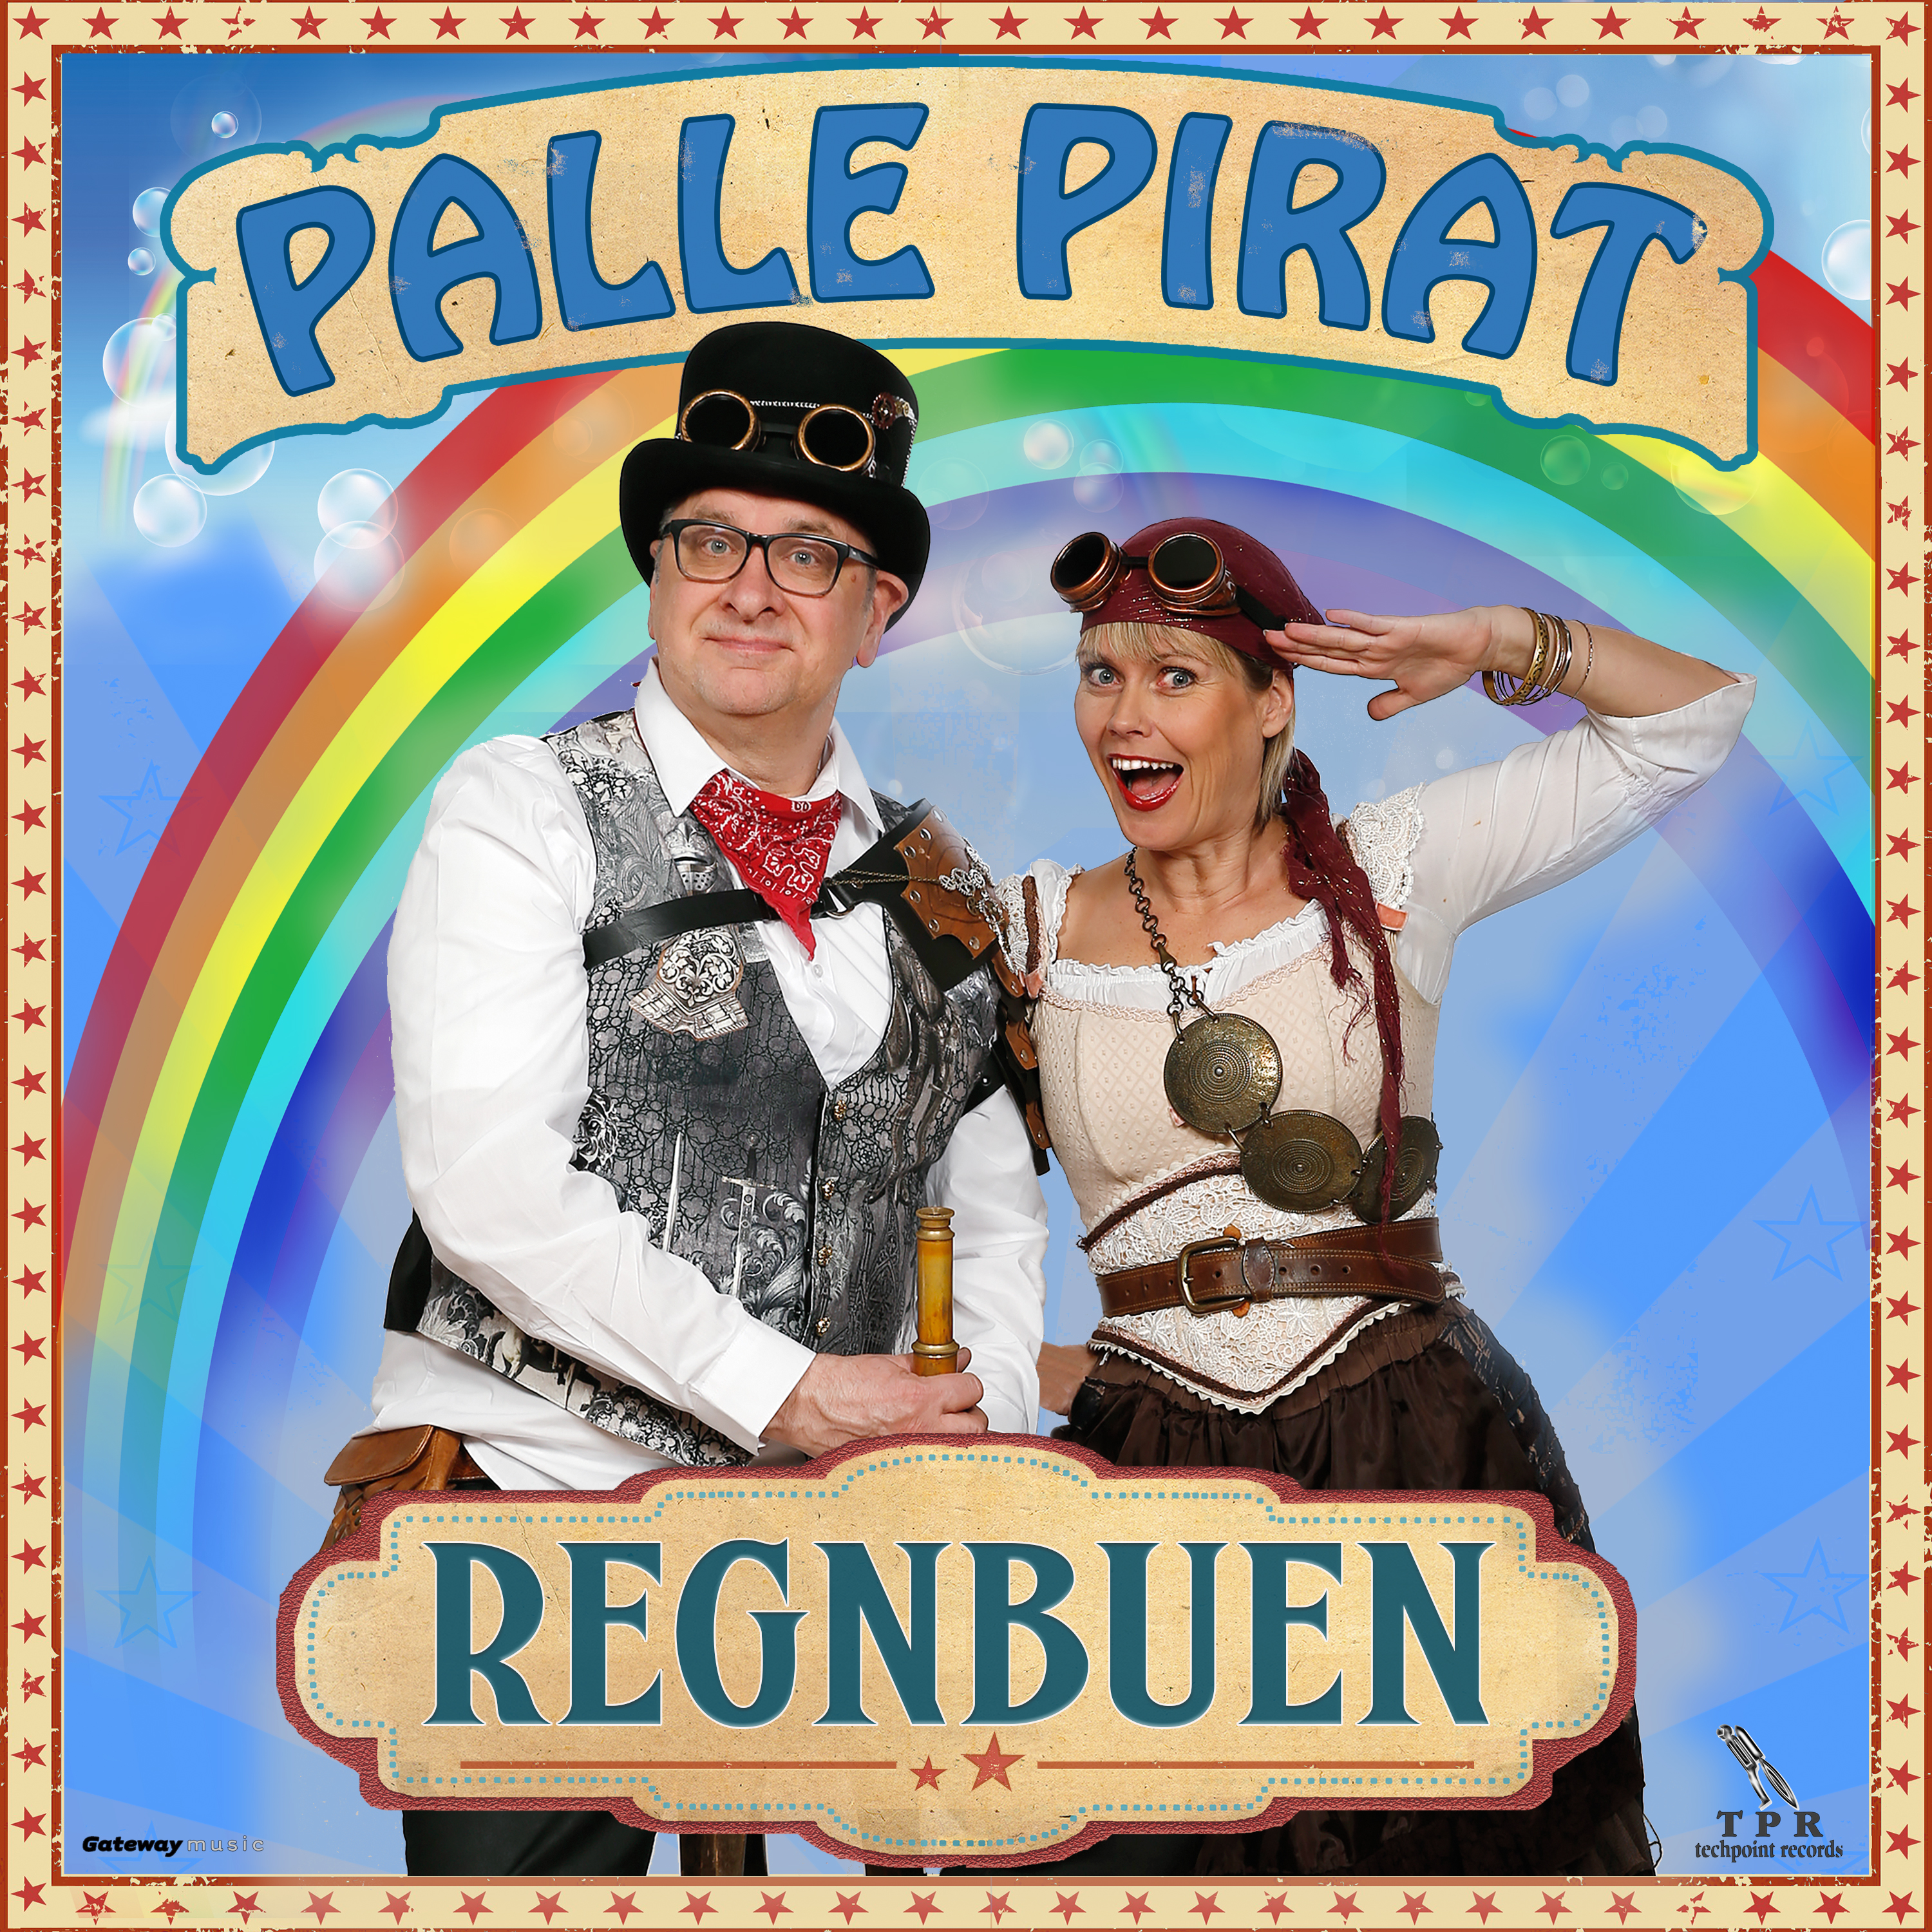 Regnbuen – Palle Pirat official musikvideo